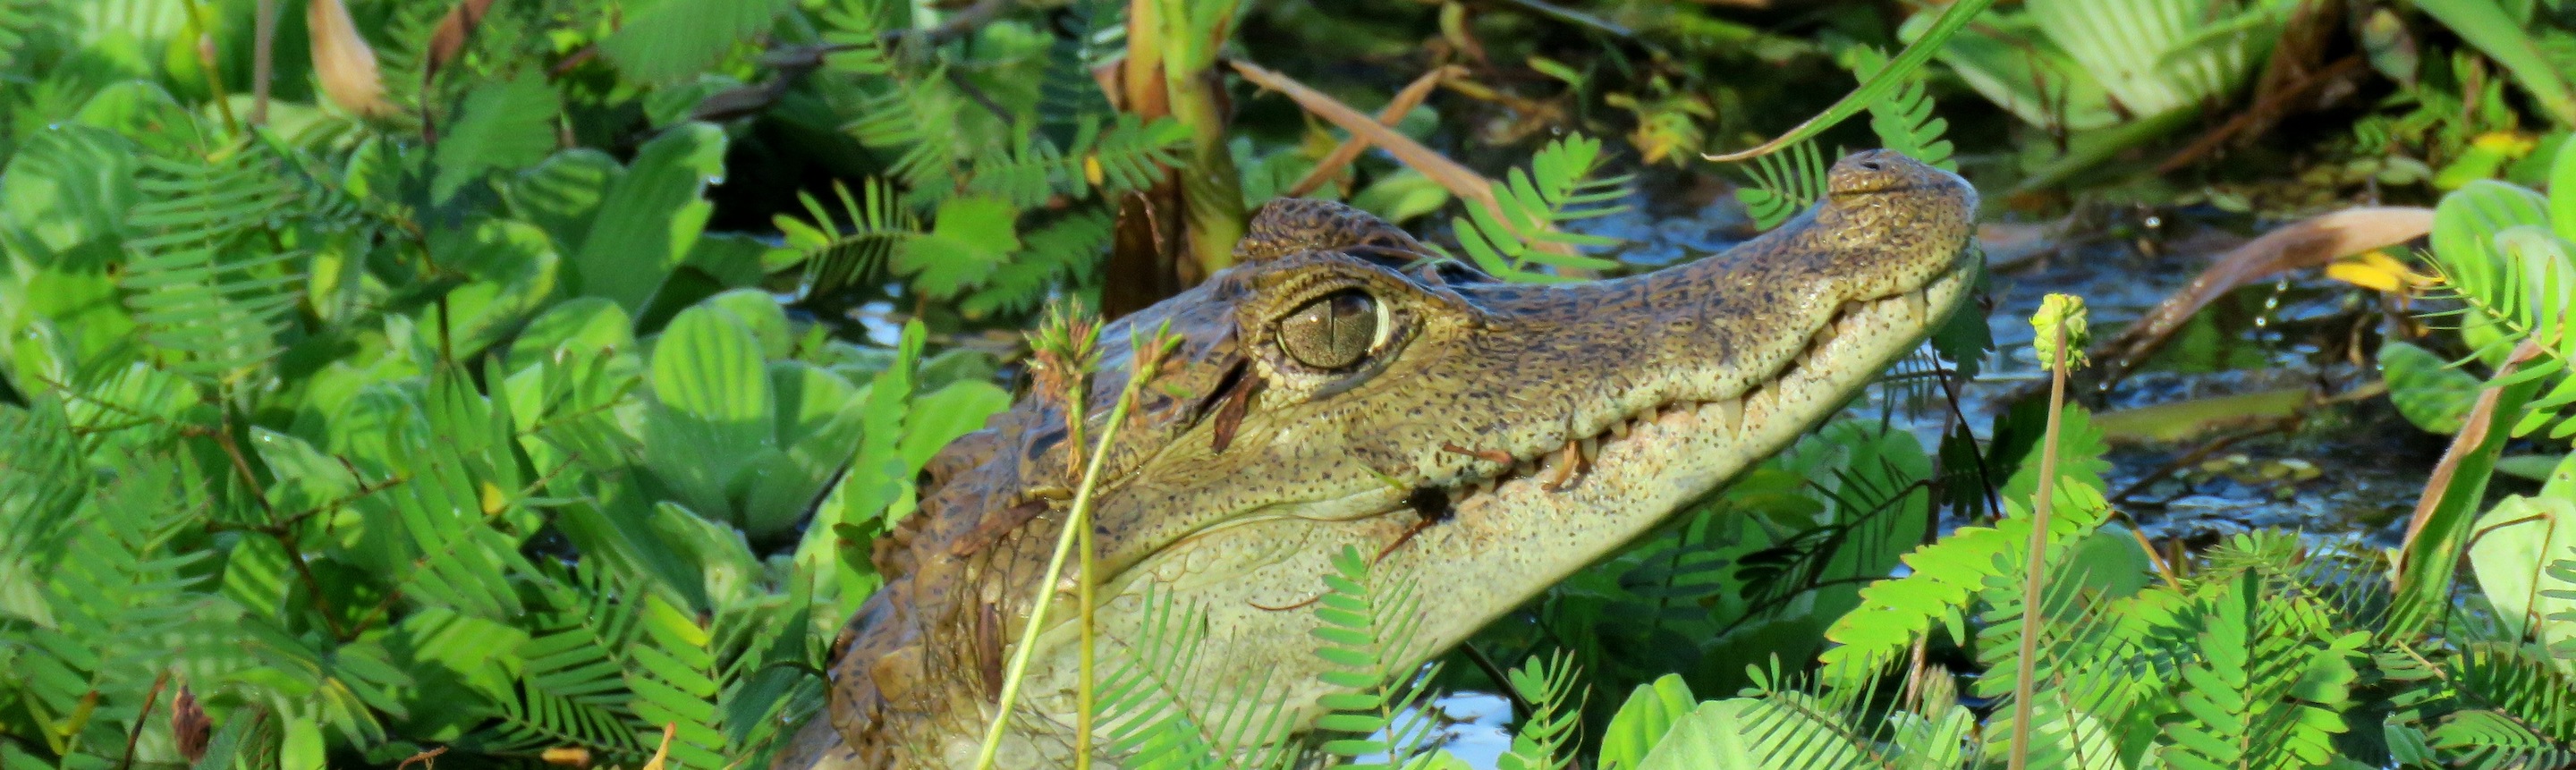 Crocodiles & Caimans Facts | Costa Rica Wildlife Guide